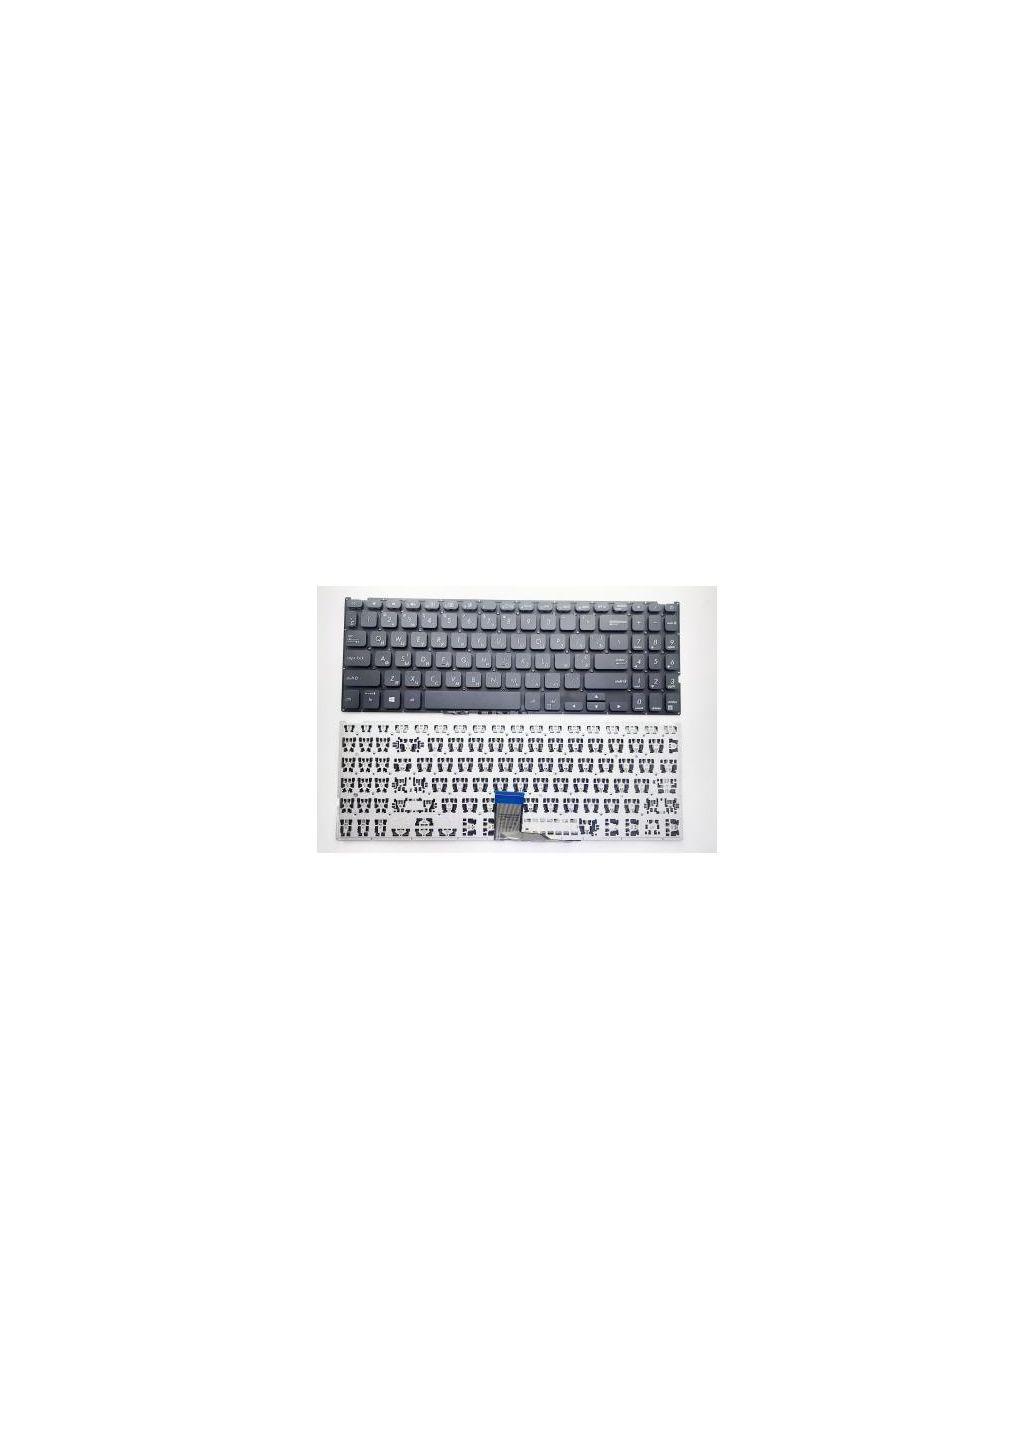 Клавиатура ноутбука X512/X512DA/X512FA/X512UA/X512UB Series черная UA (A46173) Asus x512/x512da/x512fa/x512ua/x512ub series чорна ua (276707859)